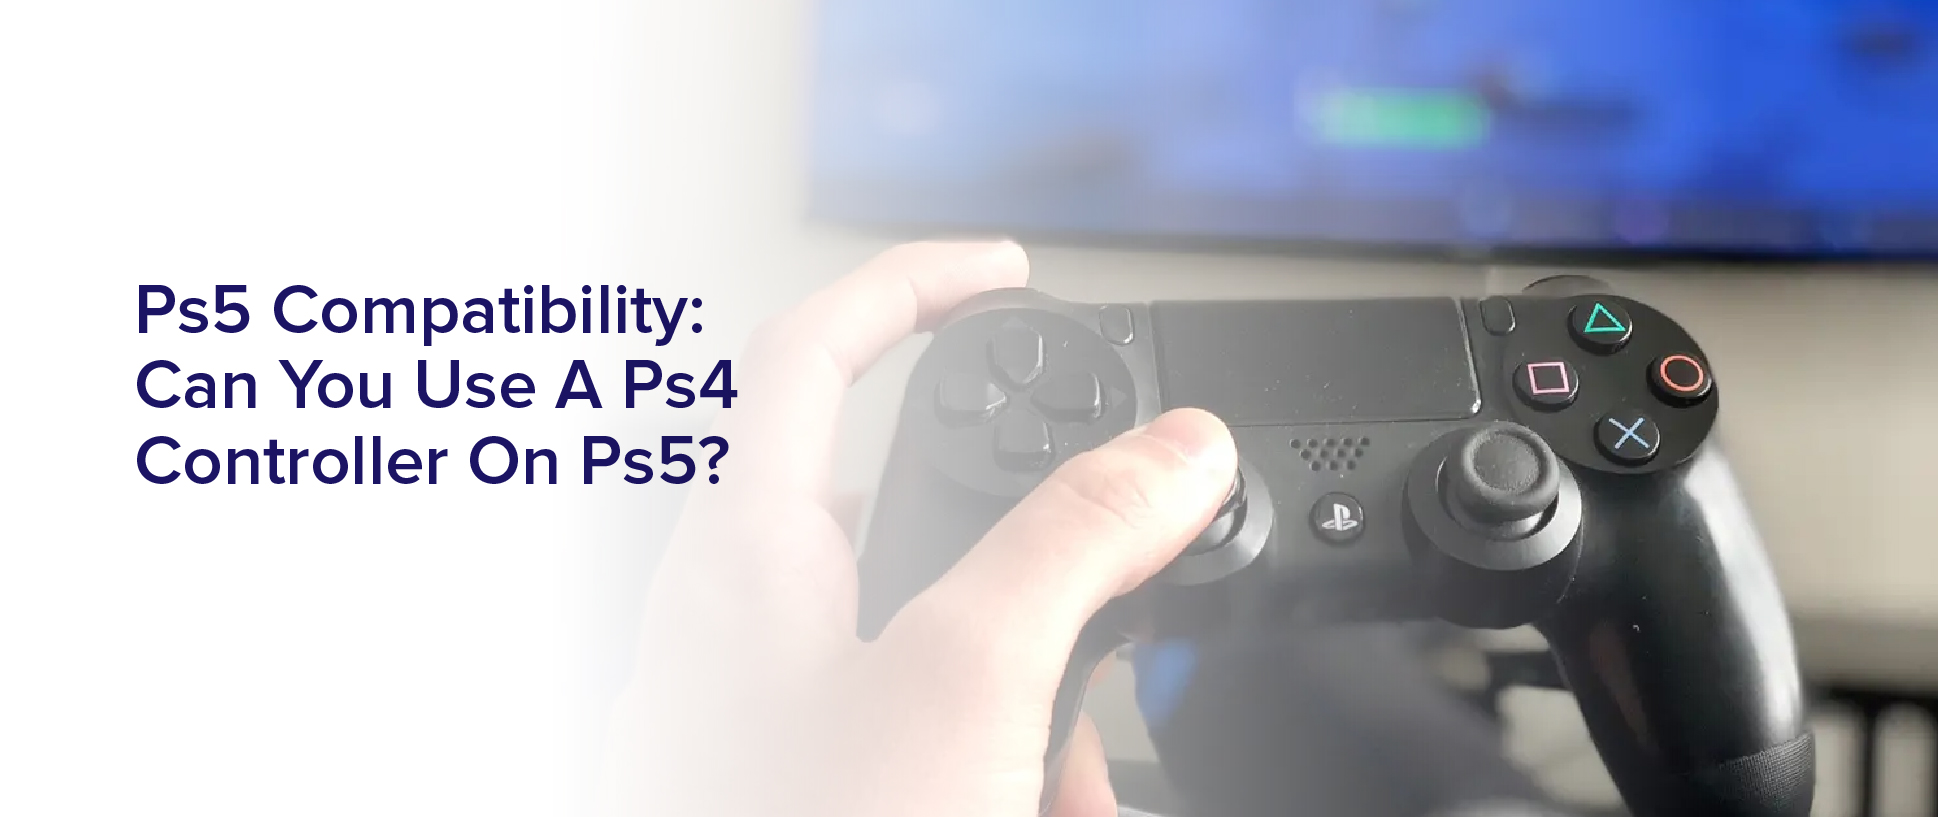 Ps5 Compatibility